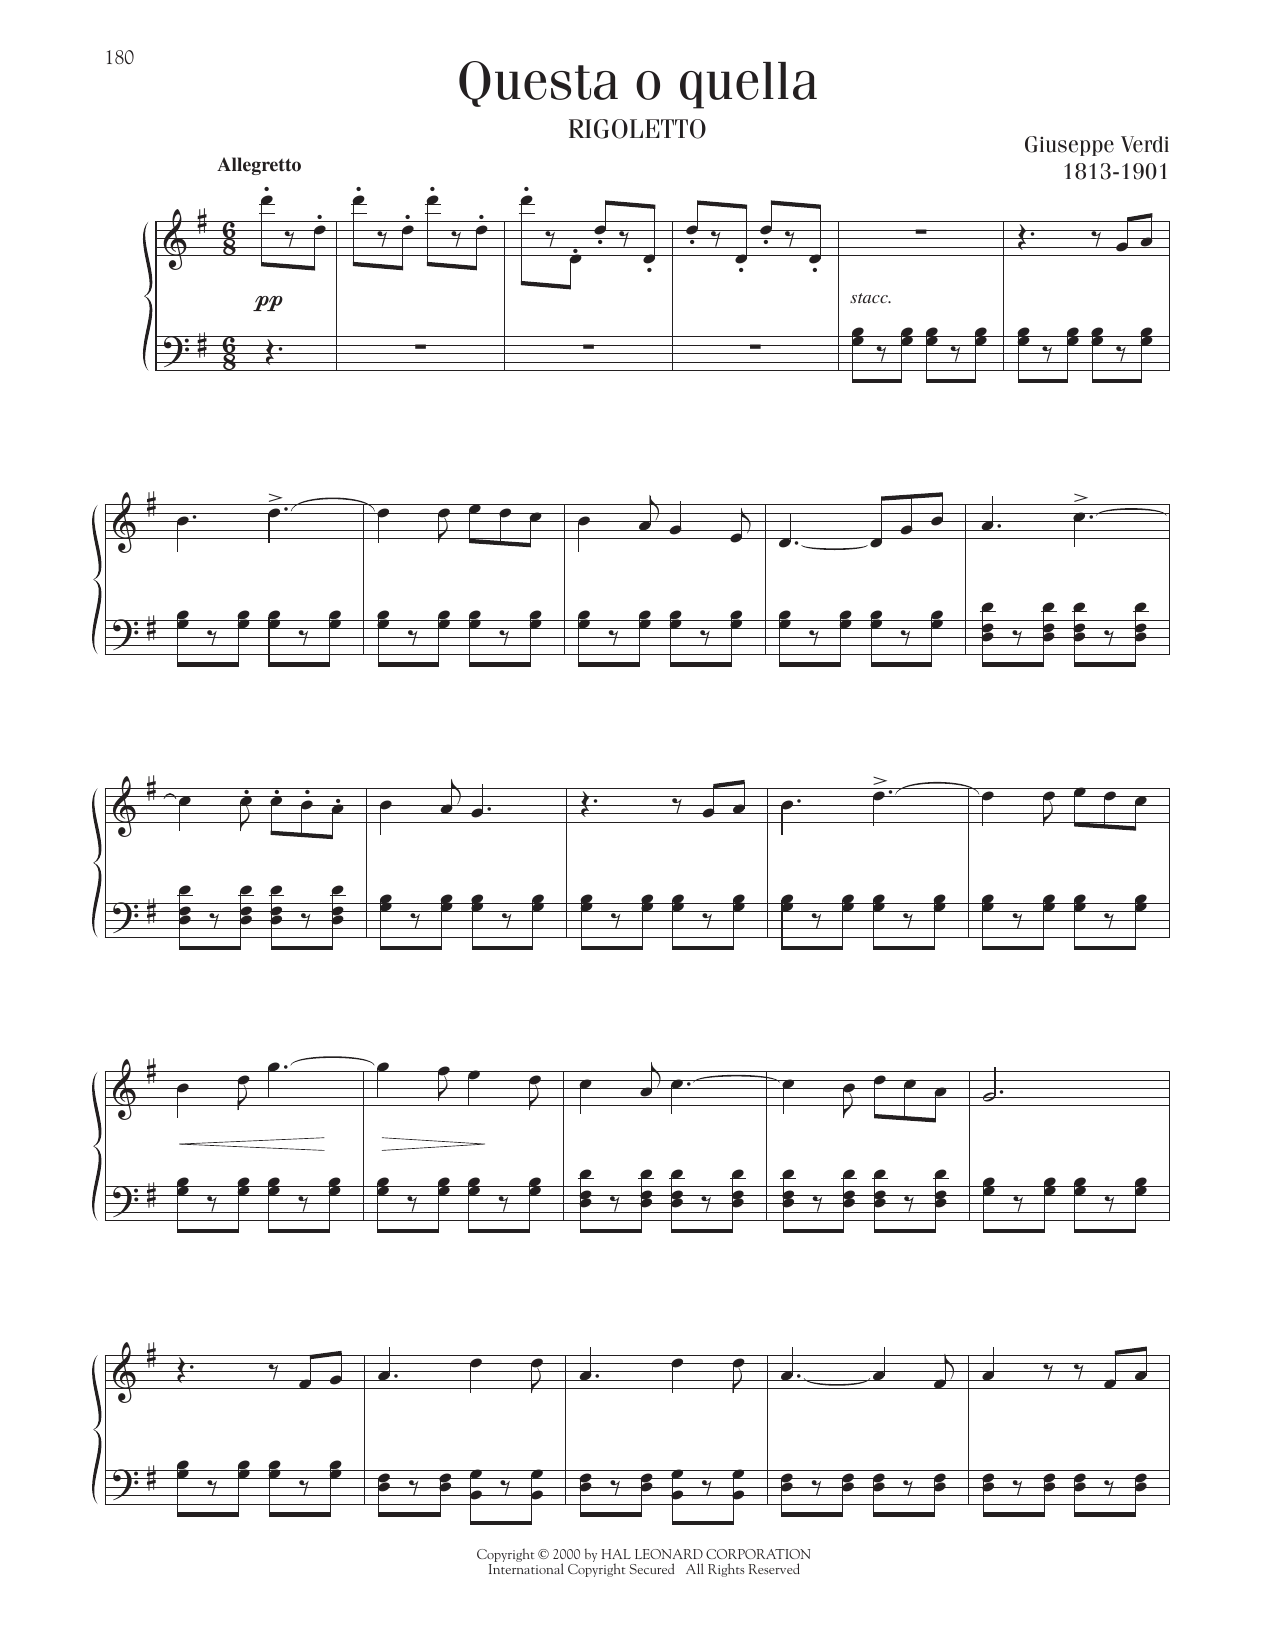 Download Giuseppe Verdi Questa O Quella Sheet Music and learn how to play Piano Solo PDF digital score in minutes